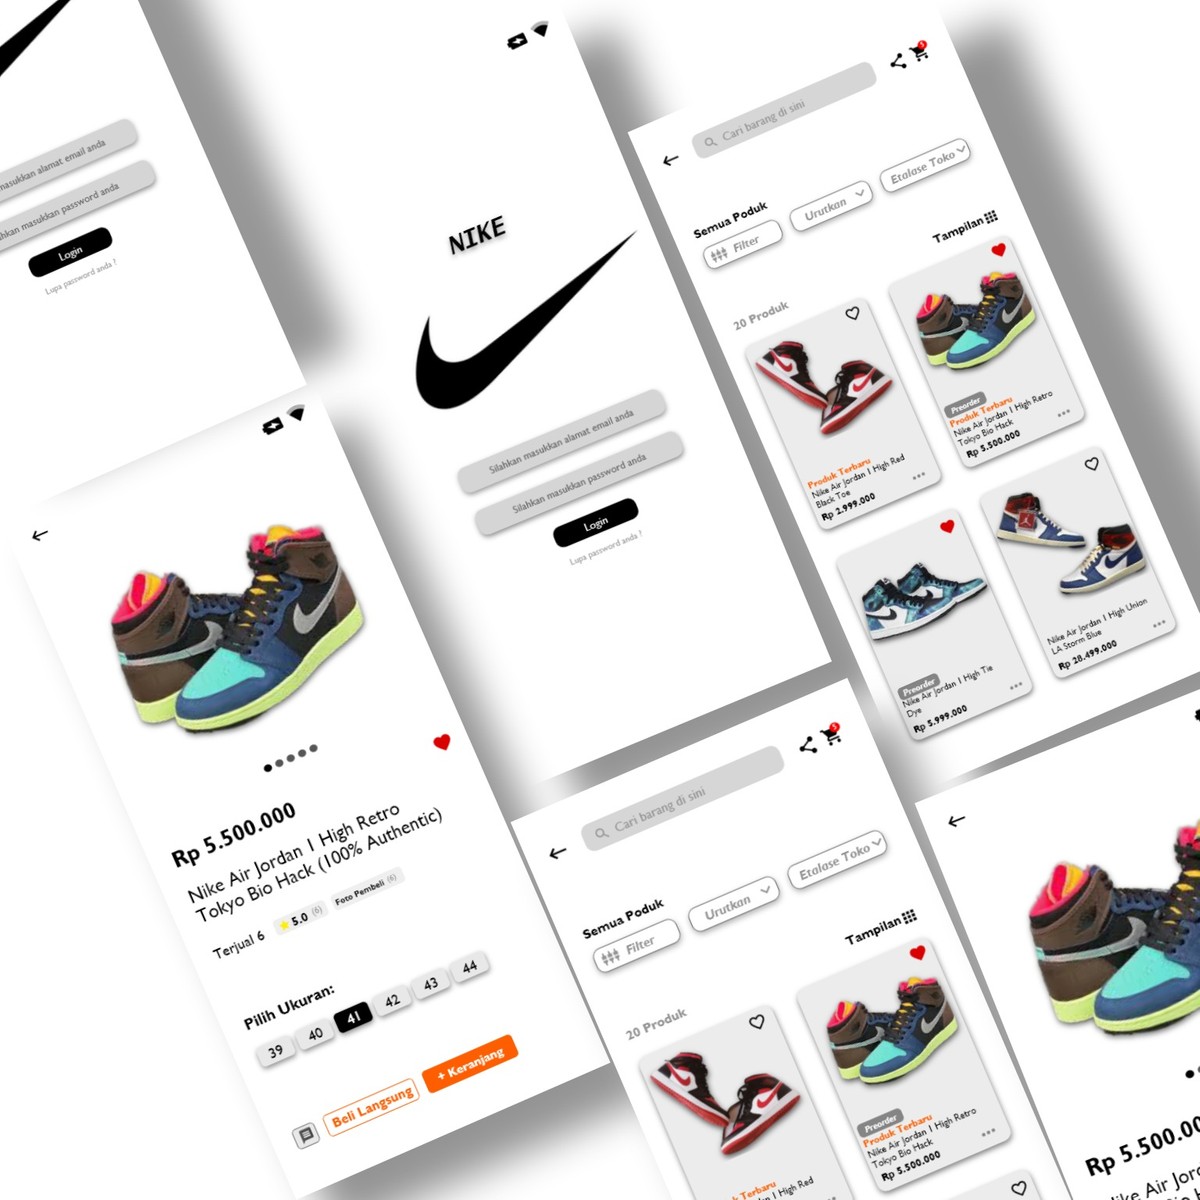 lluvia virtual Involucrado UI Design Mobile App Nike Store | Web & Mobile Design portfolio by Fachru  Riza B | RemoteHub